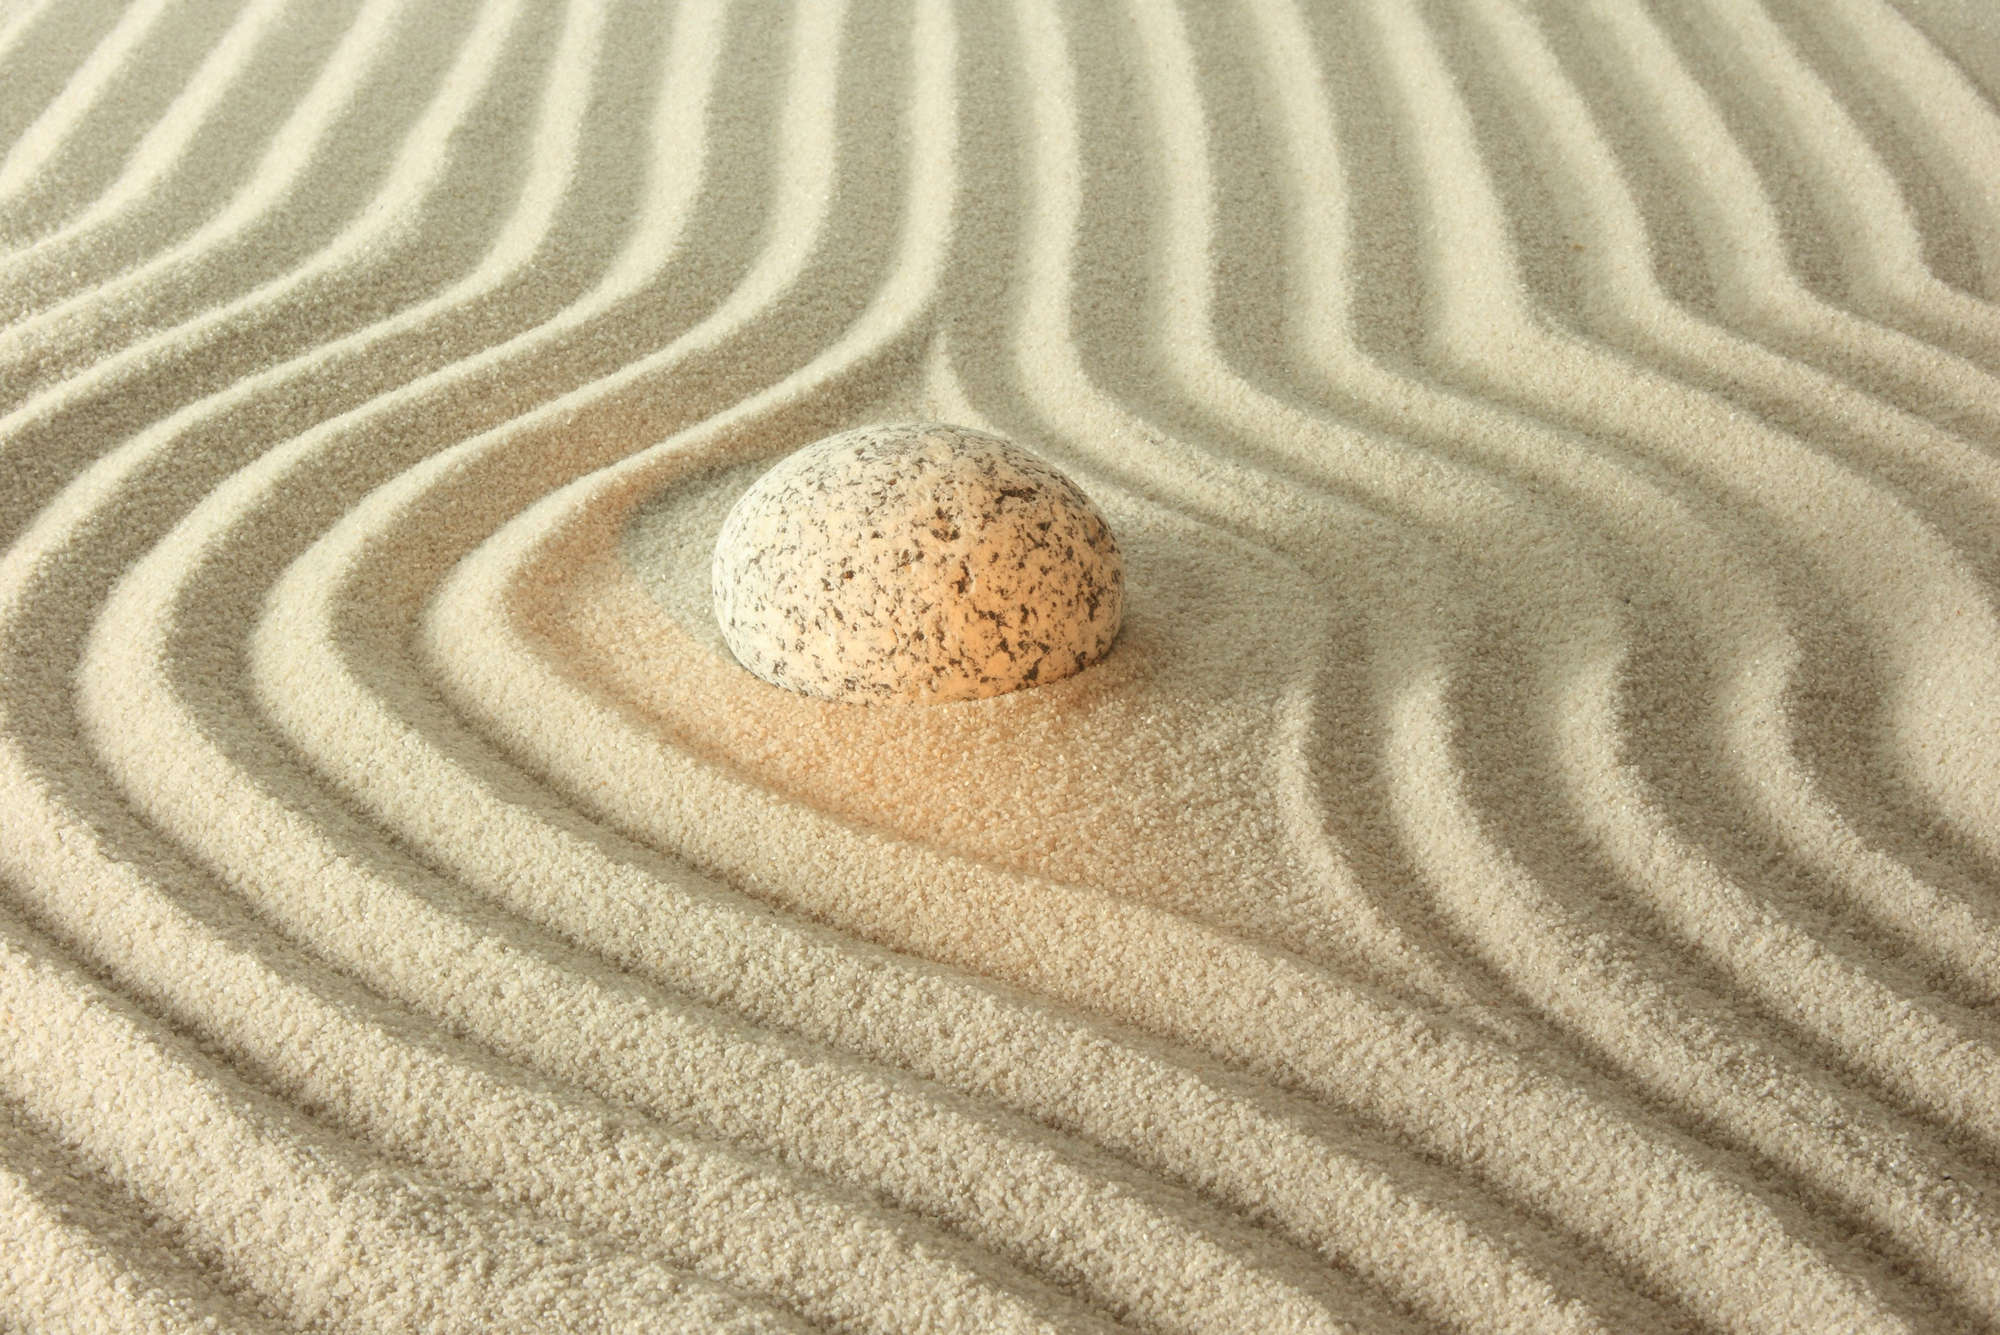             Digital behang gloeiende steen in het zand - Premium glad vlies
        